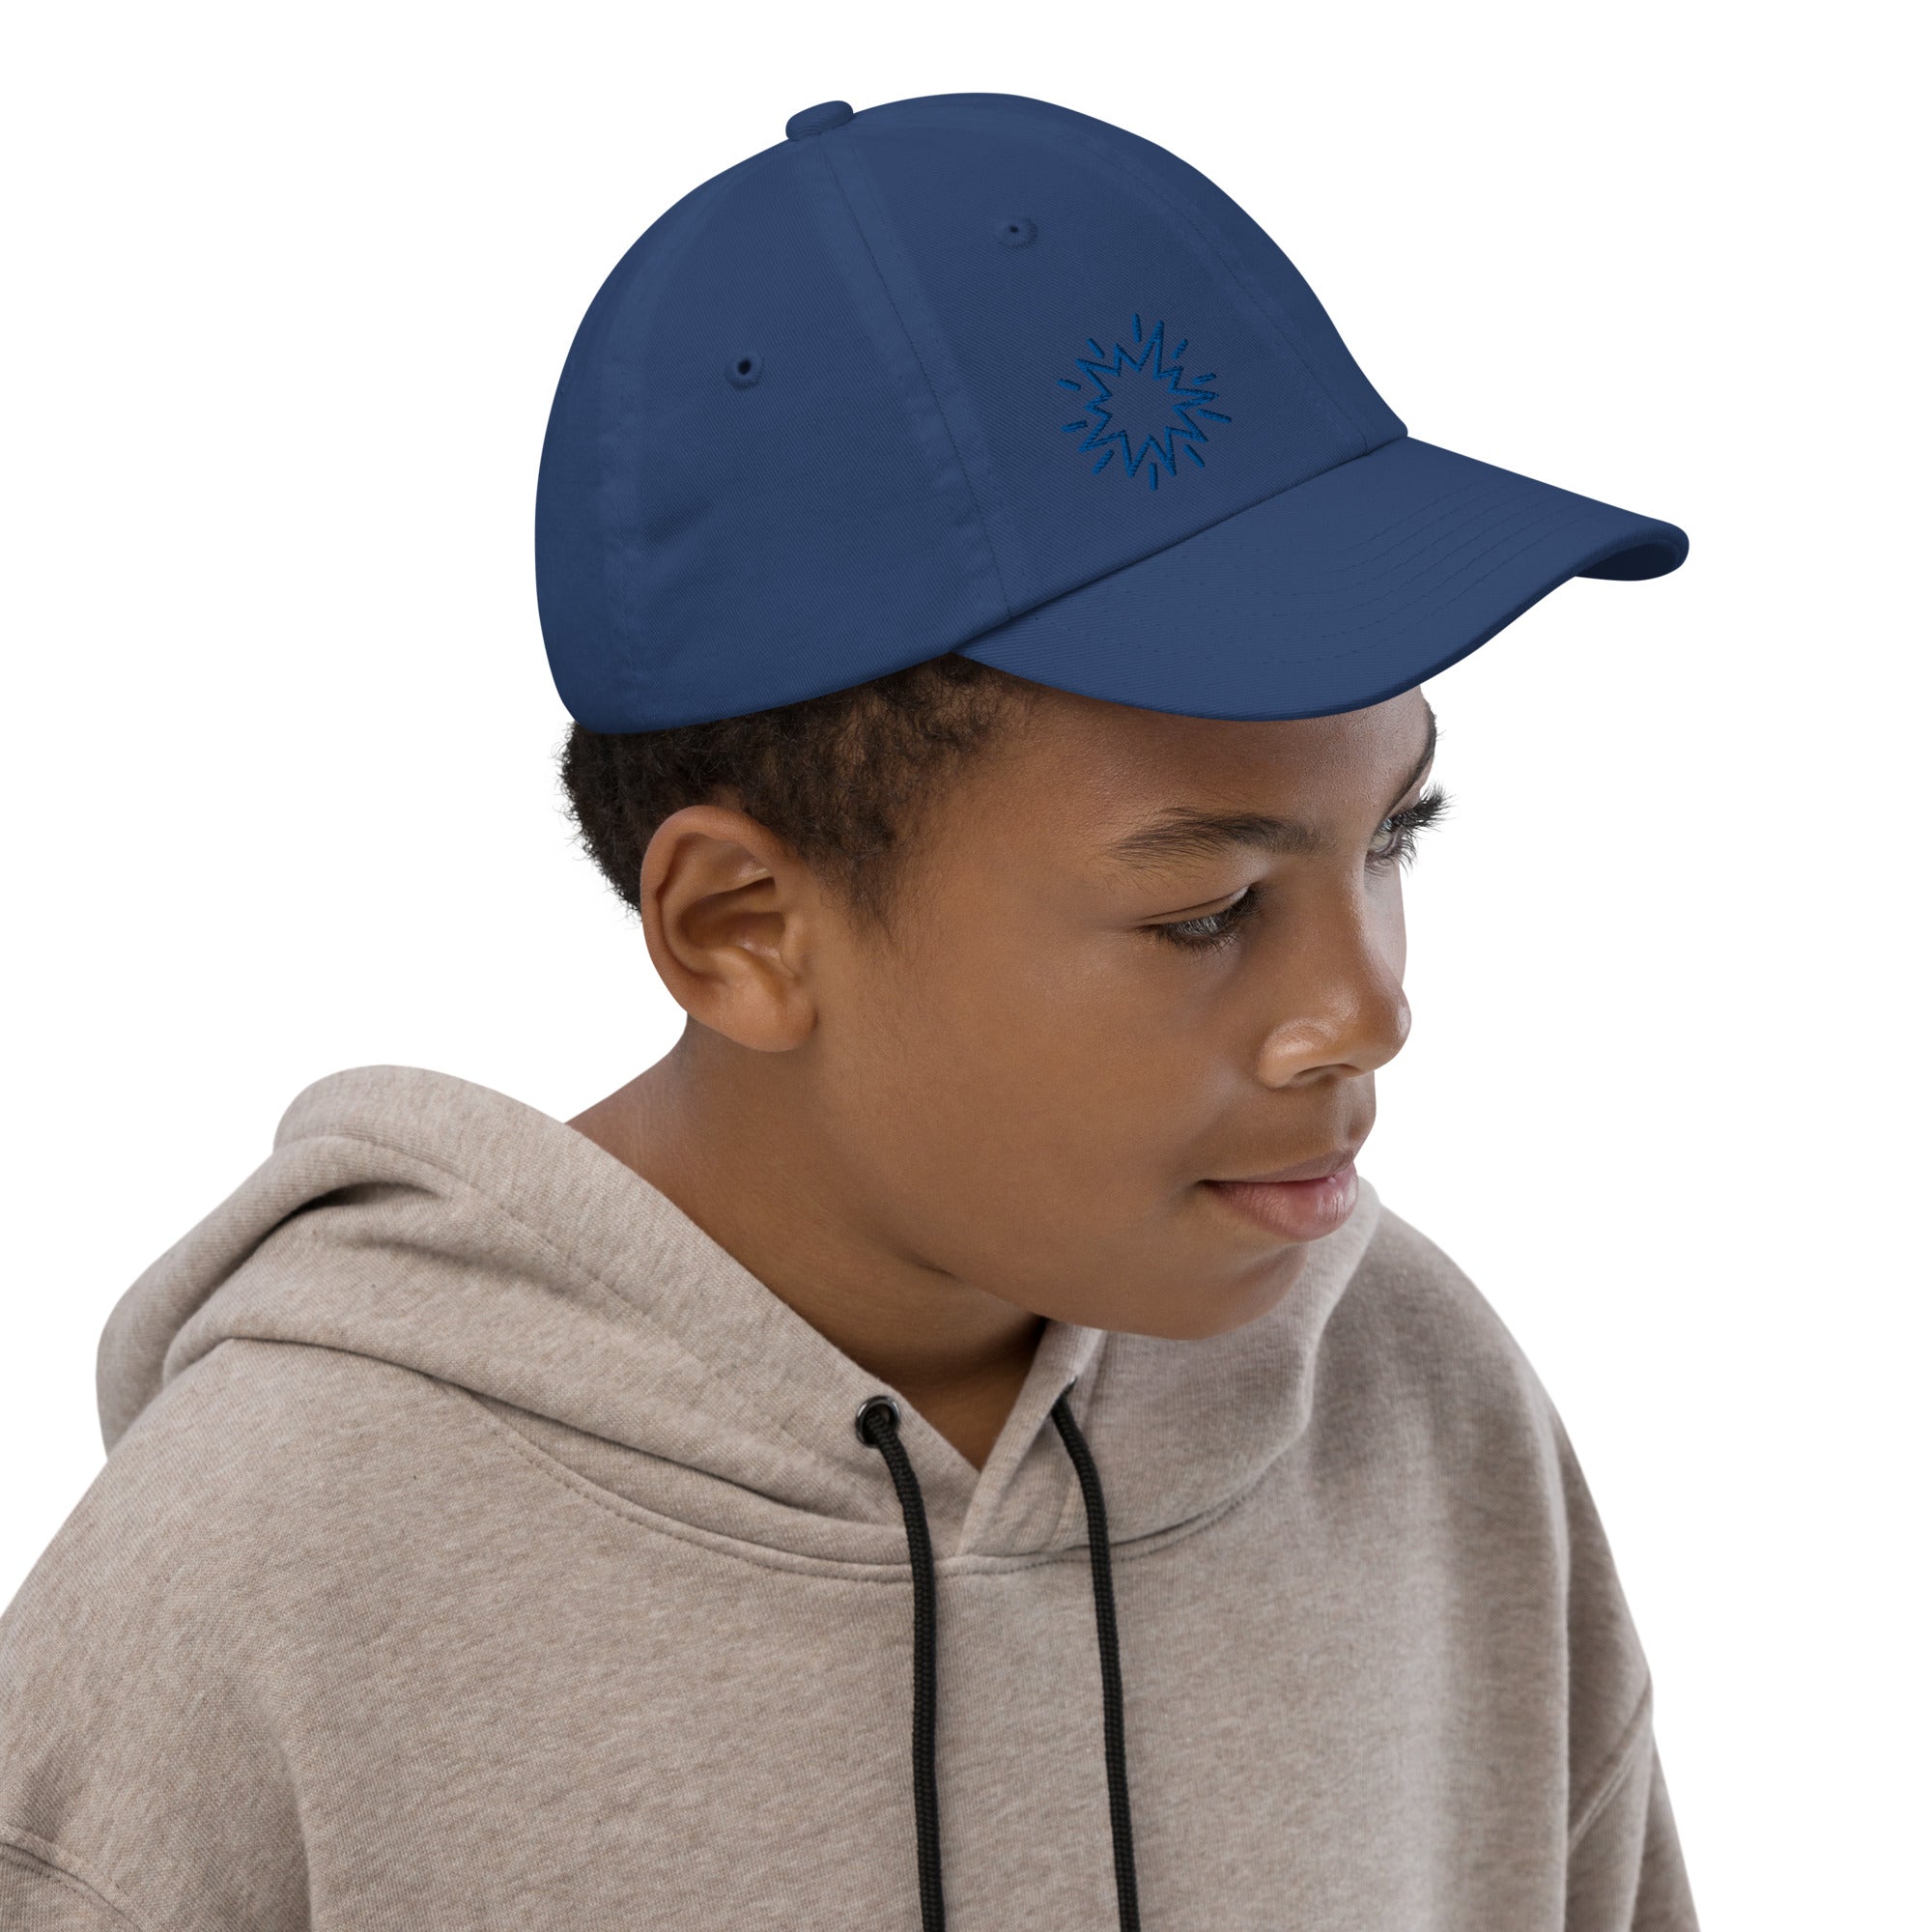 Buy royal Youth Classic Baseball Cap